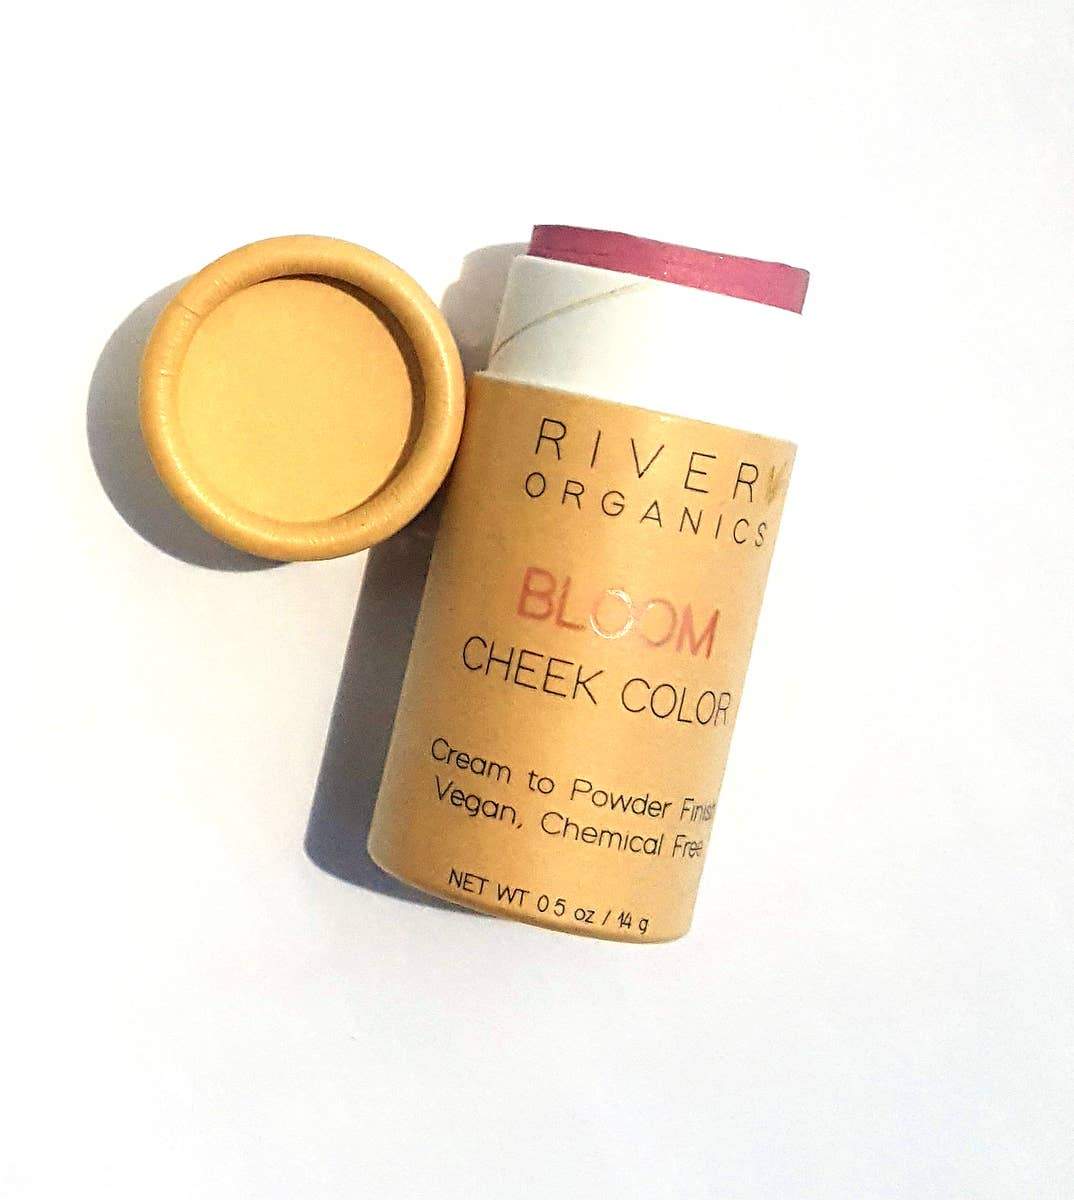 Vegan Cheek Color in "Bloom" - River Organics -Freehand Market